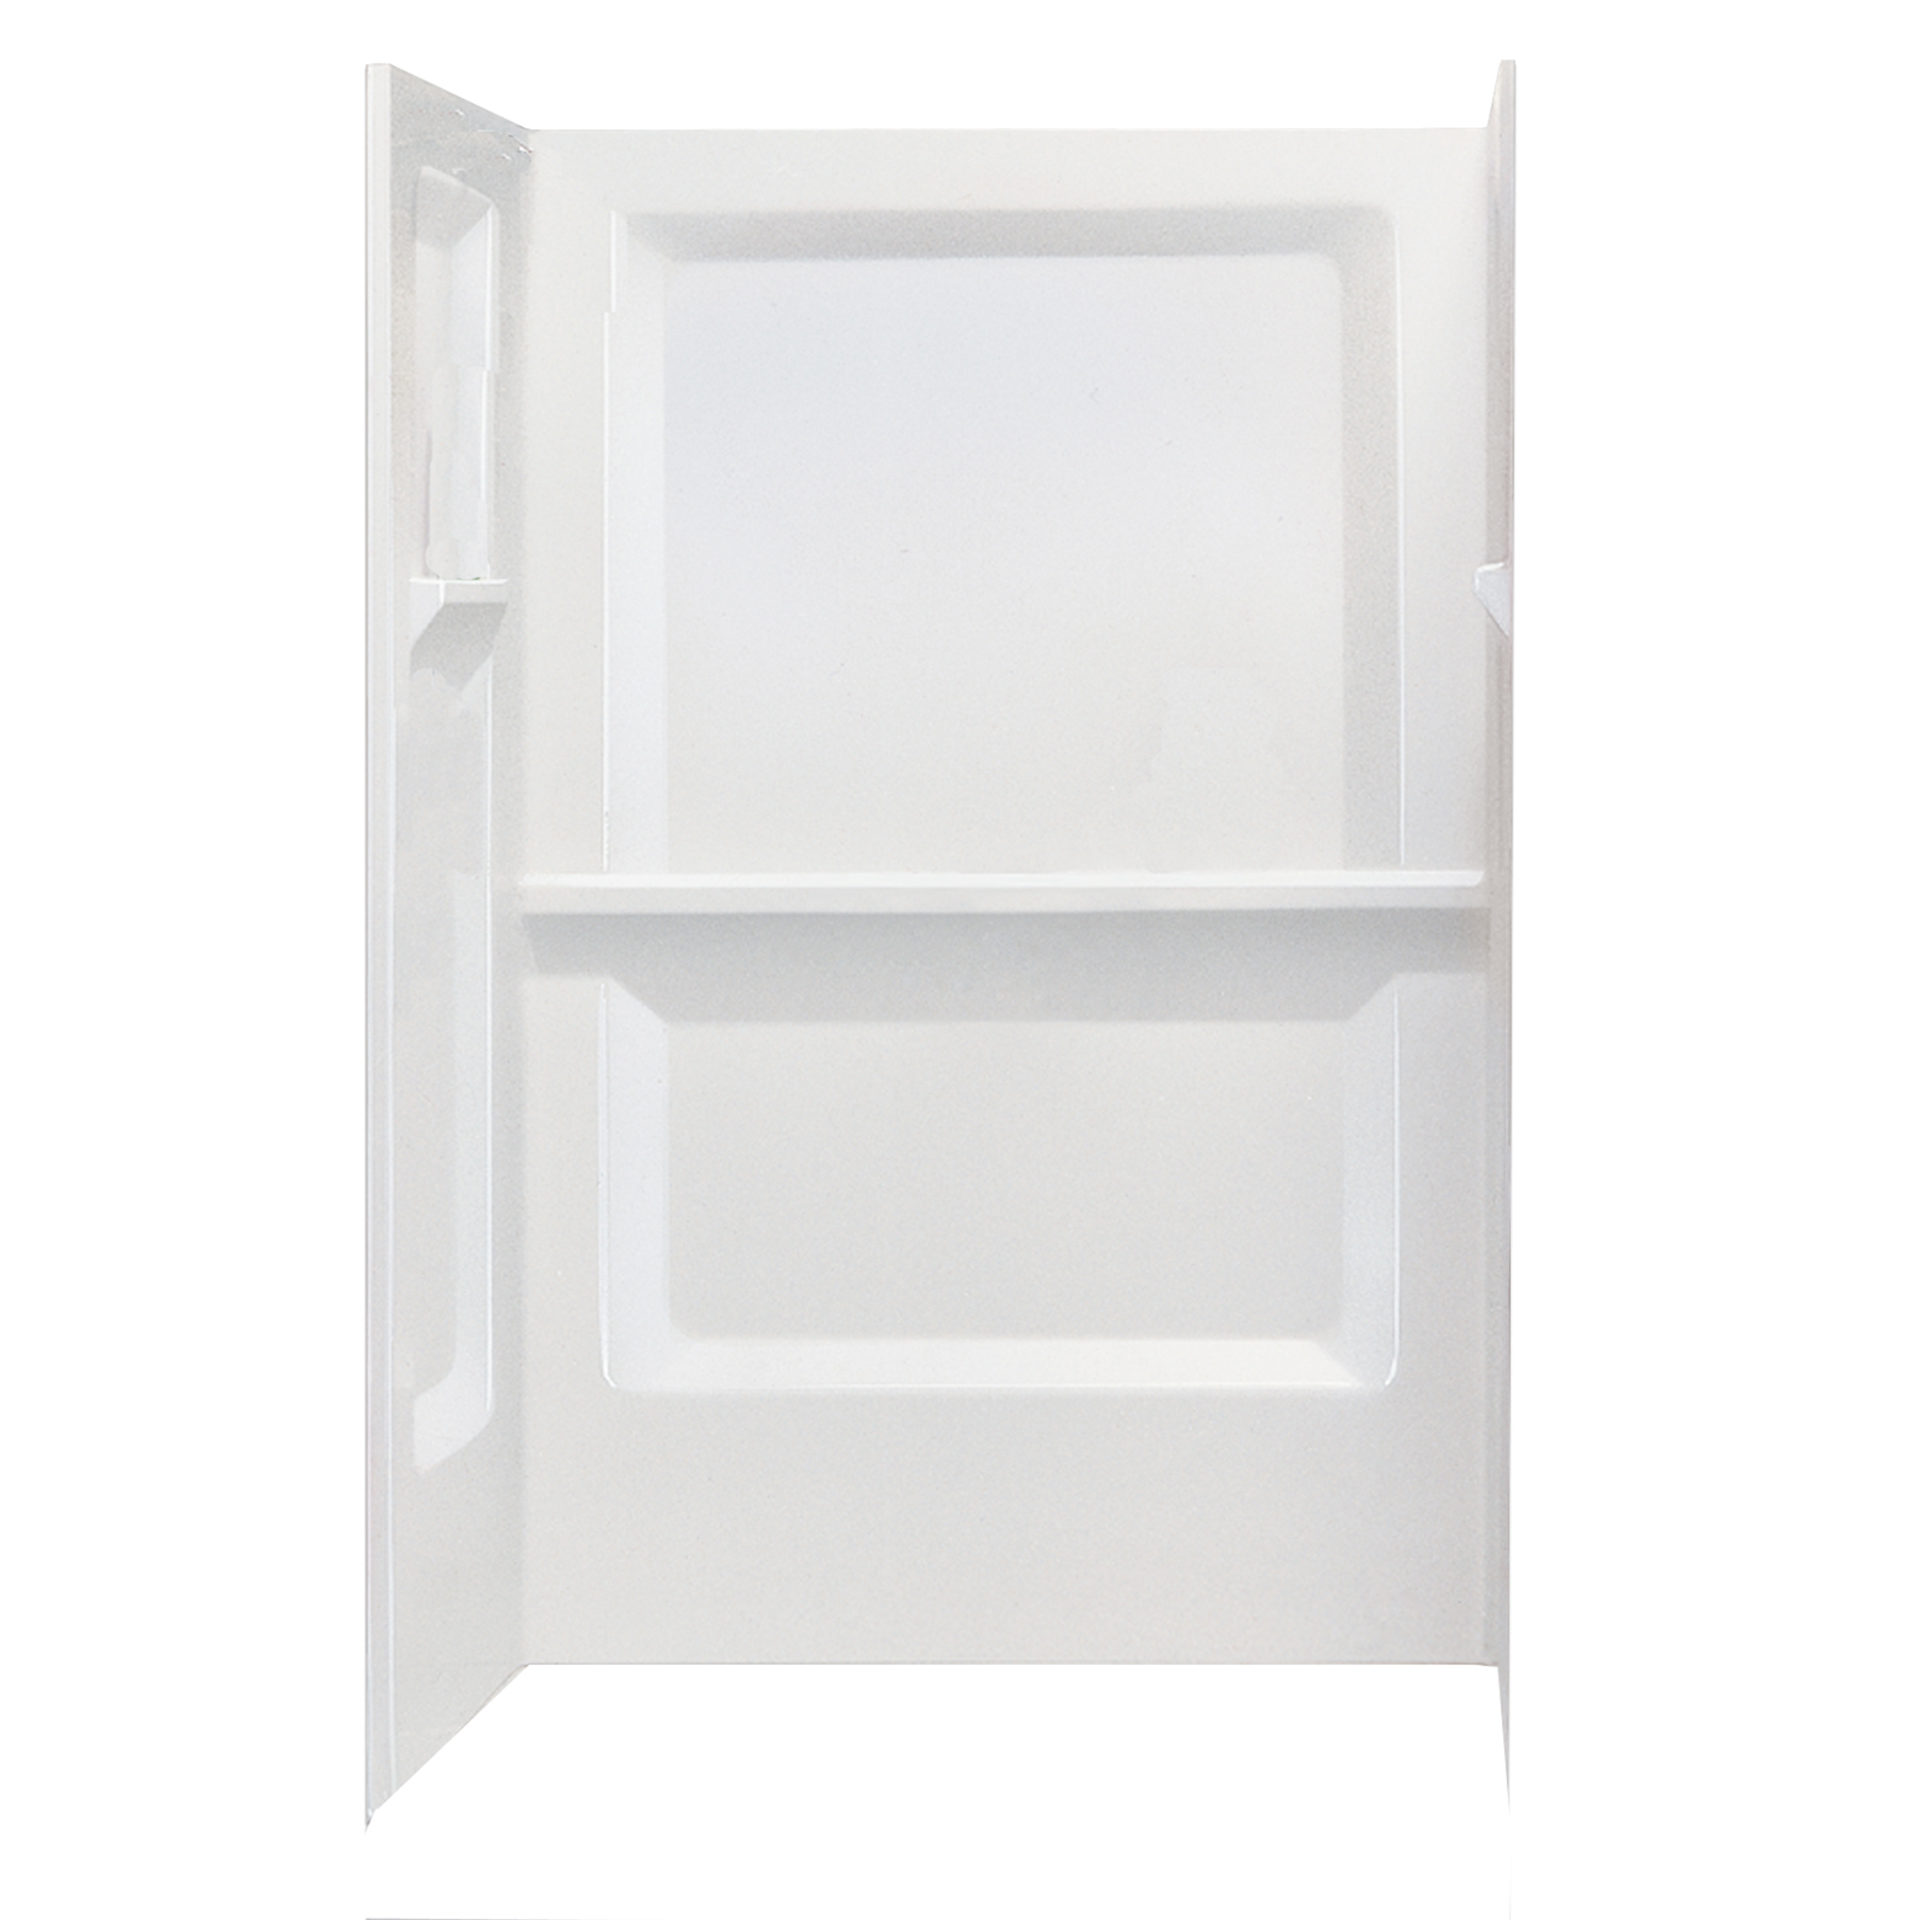 Durawall 32x48" Rectangular Shower Wall Kit in White